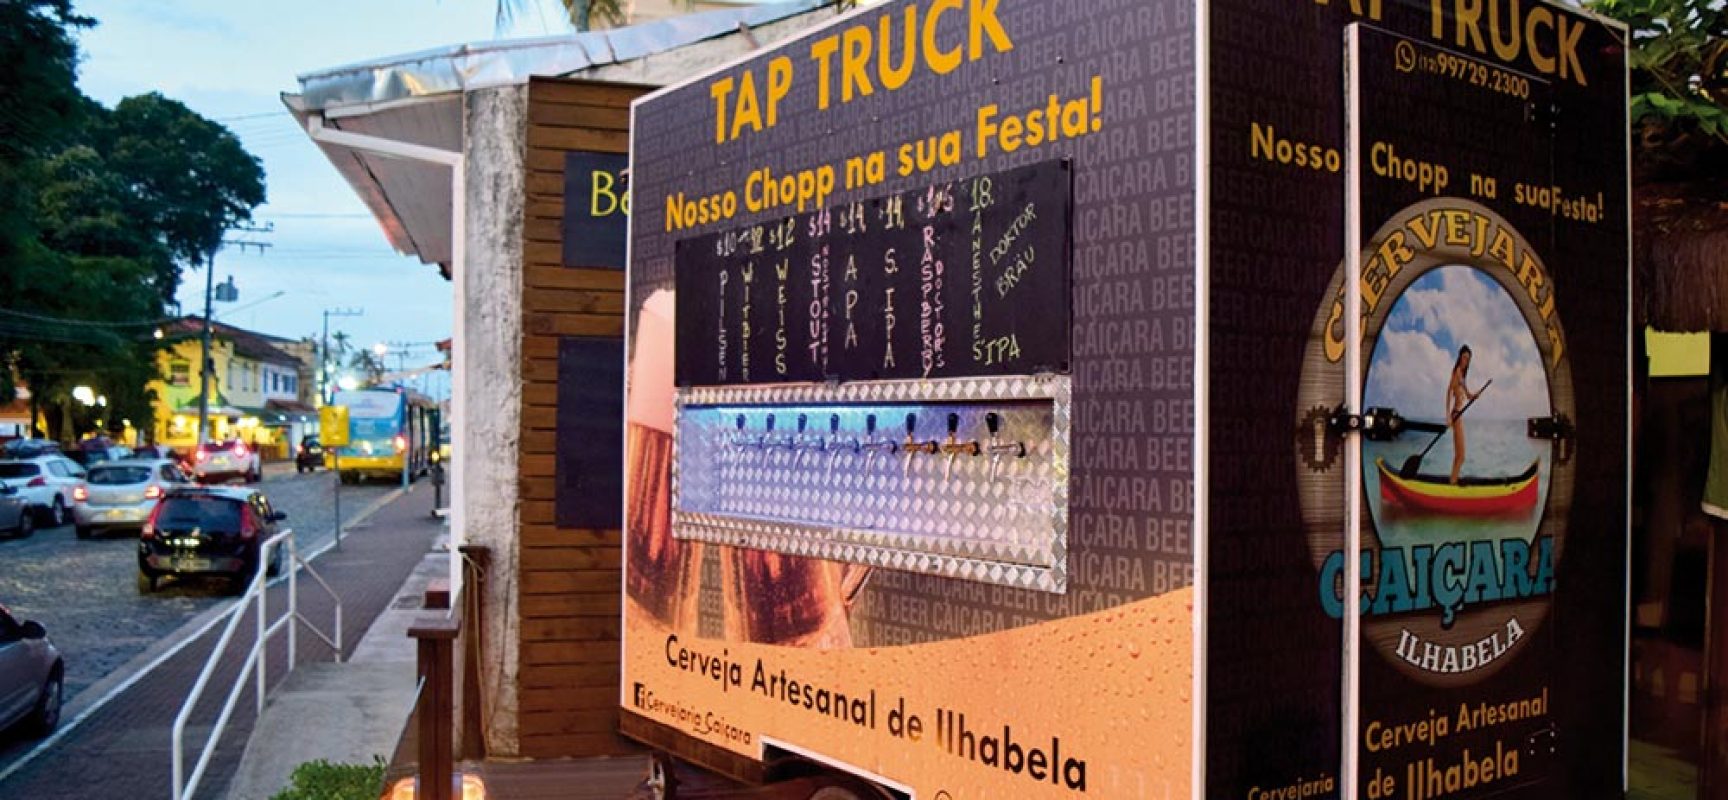 TAP TRUCK – cerveja artesanal de Ilhabela na sua festa!